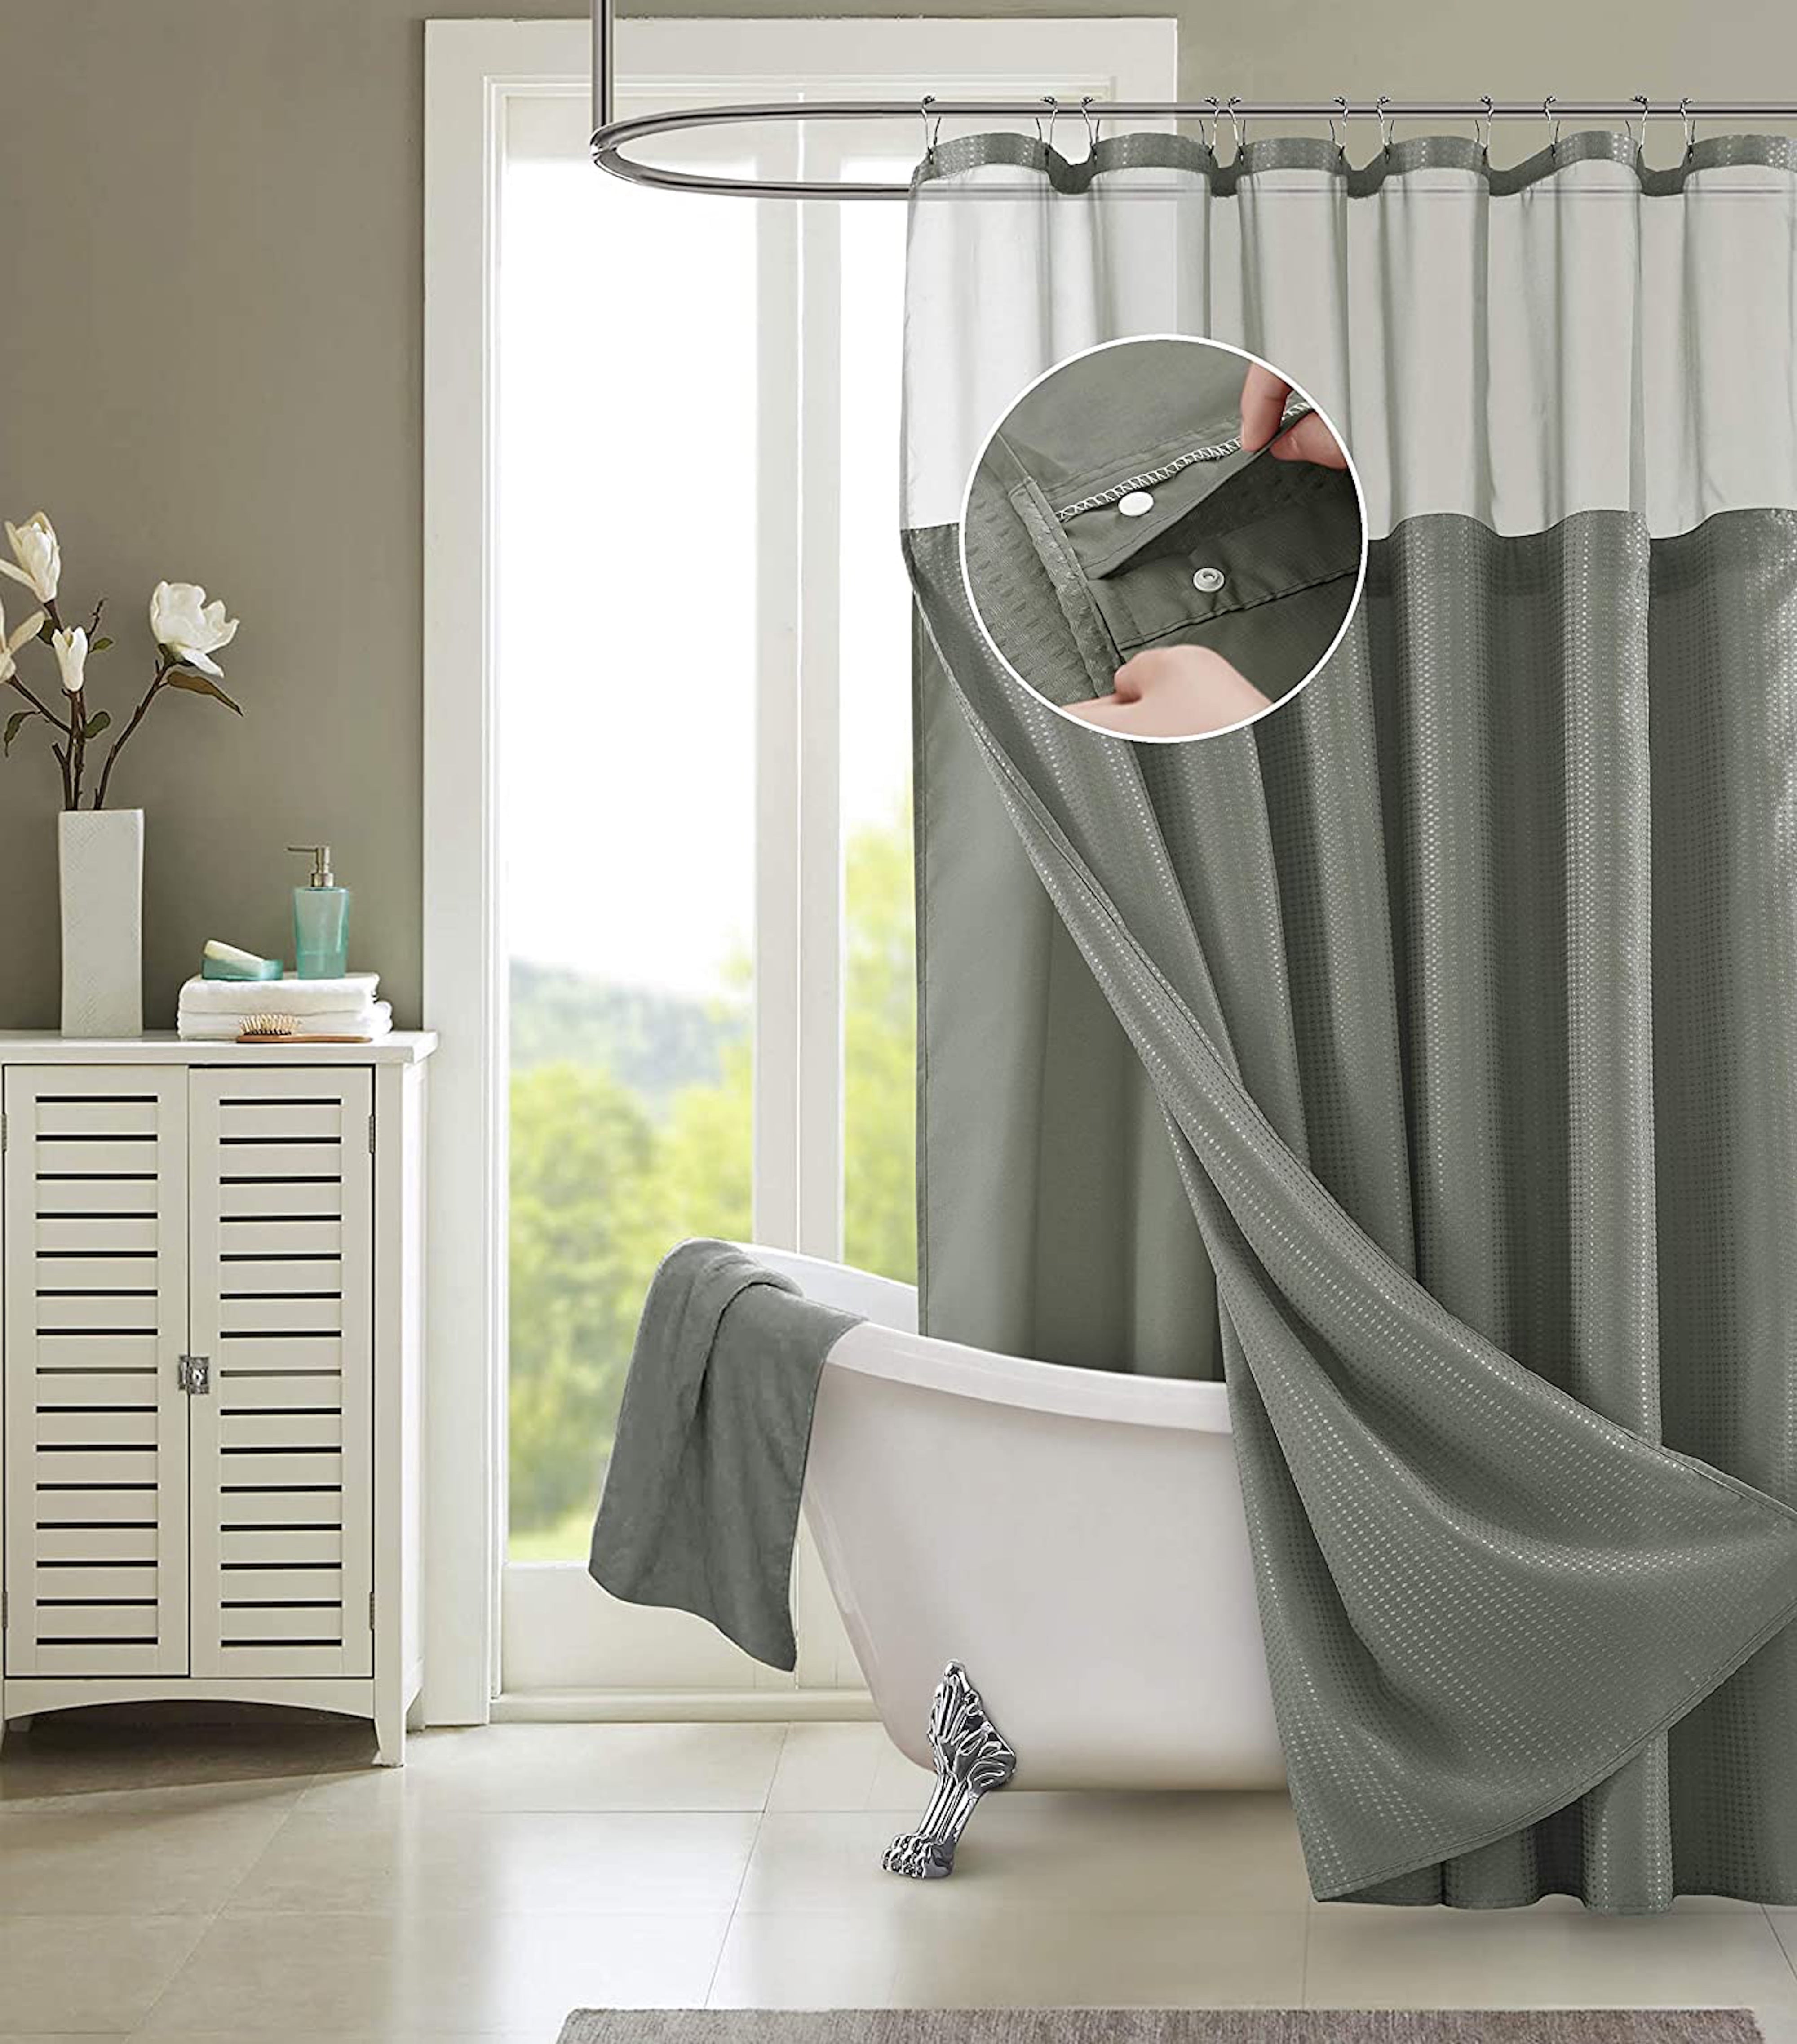 72" Waterproof Fabric Bathroom Shower Curtain Nature Printing Home W/Hooks Set 